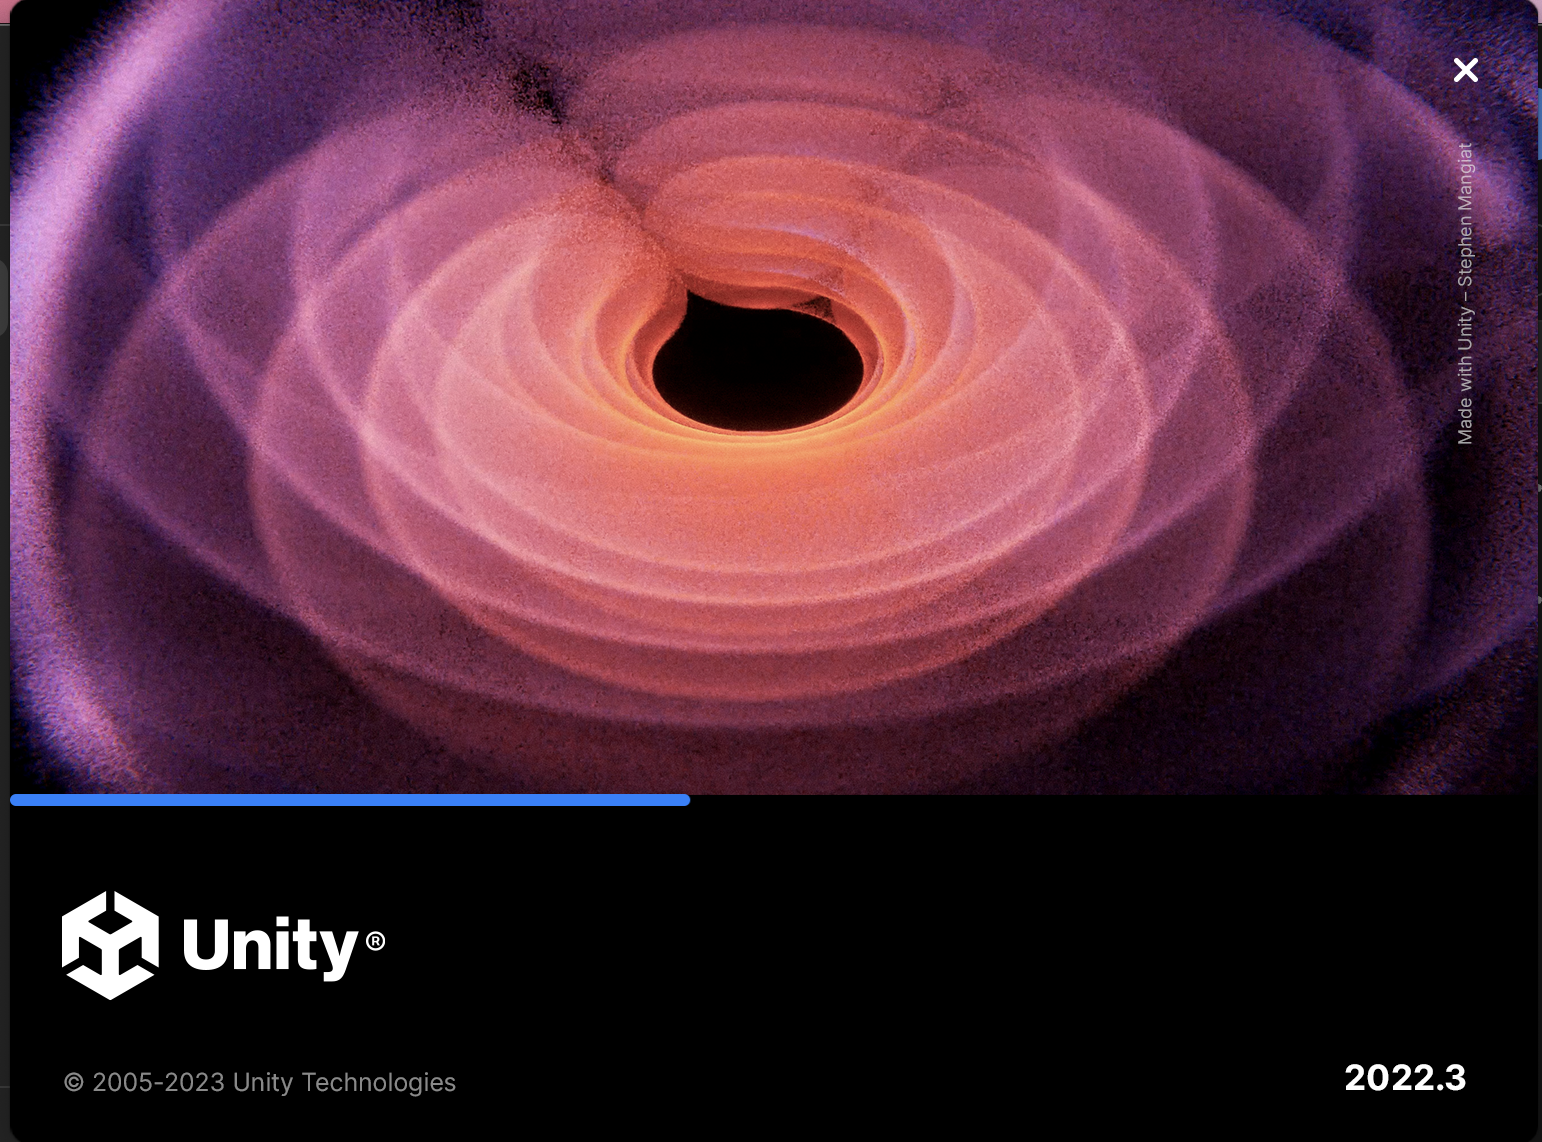 Unity: “Code Editor Application”